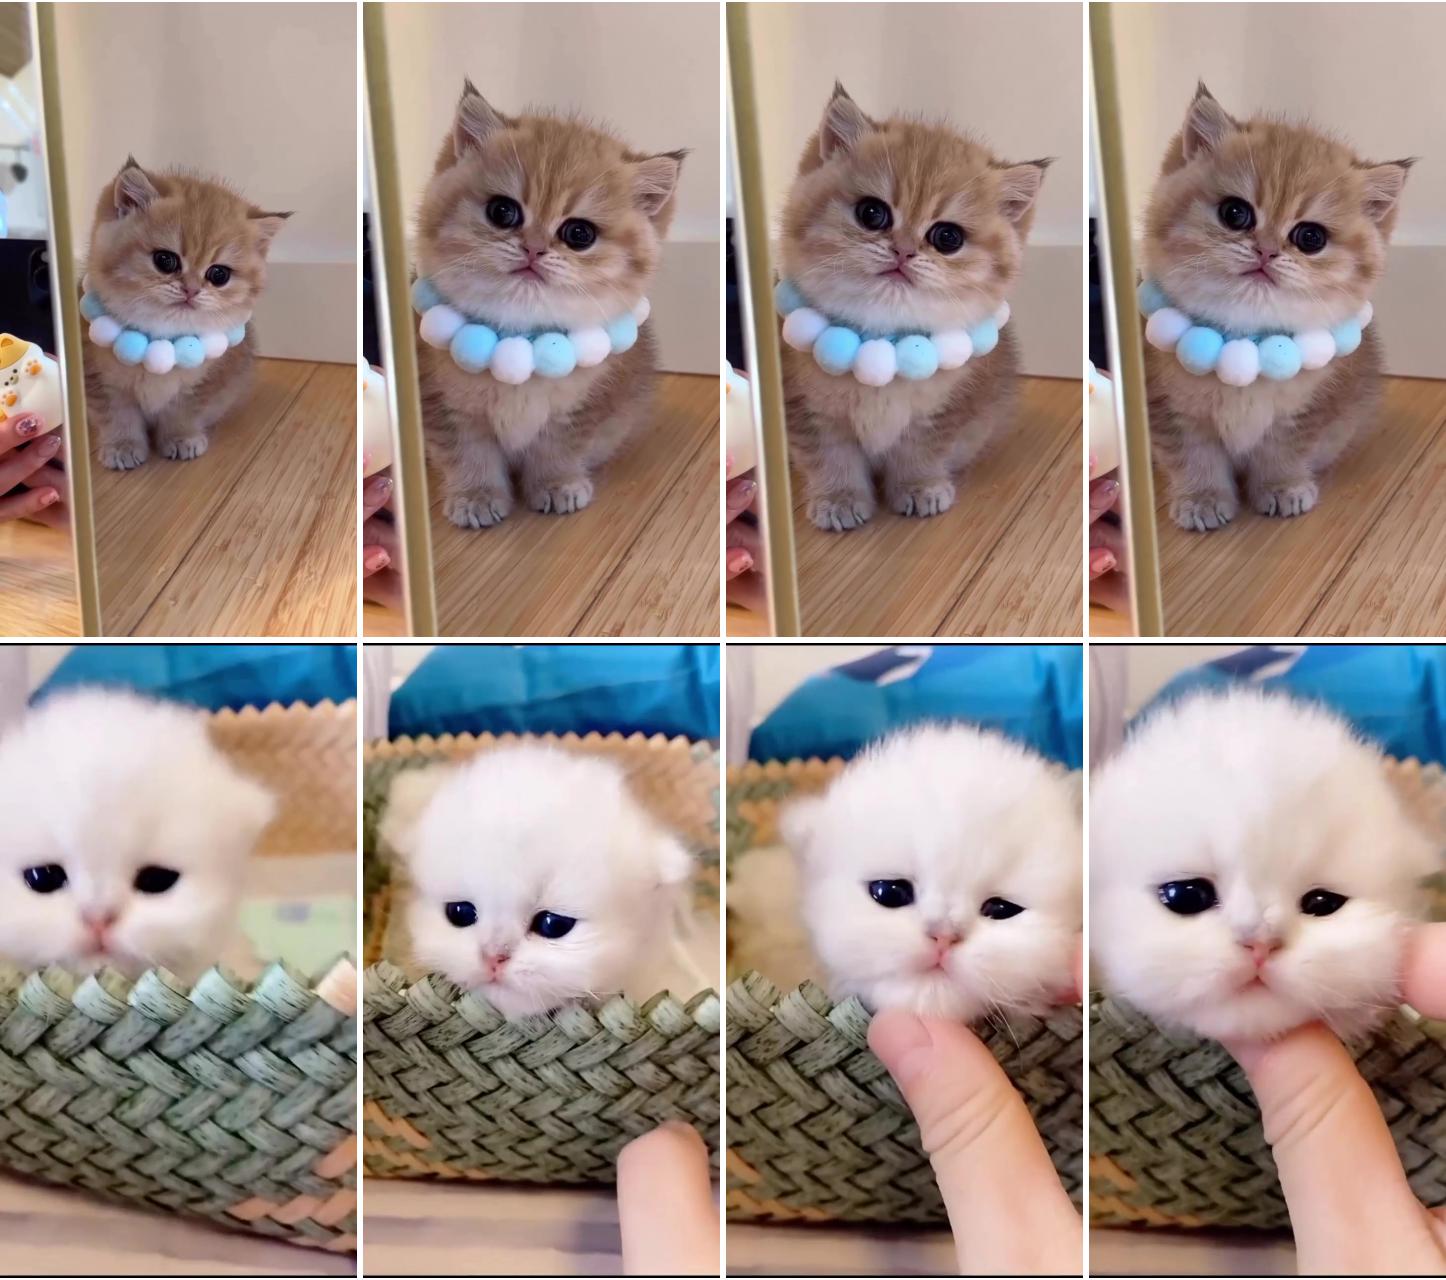 Innocent look ; cute kitten